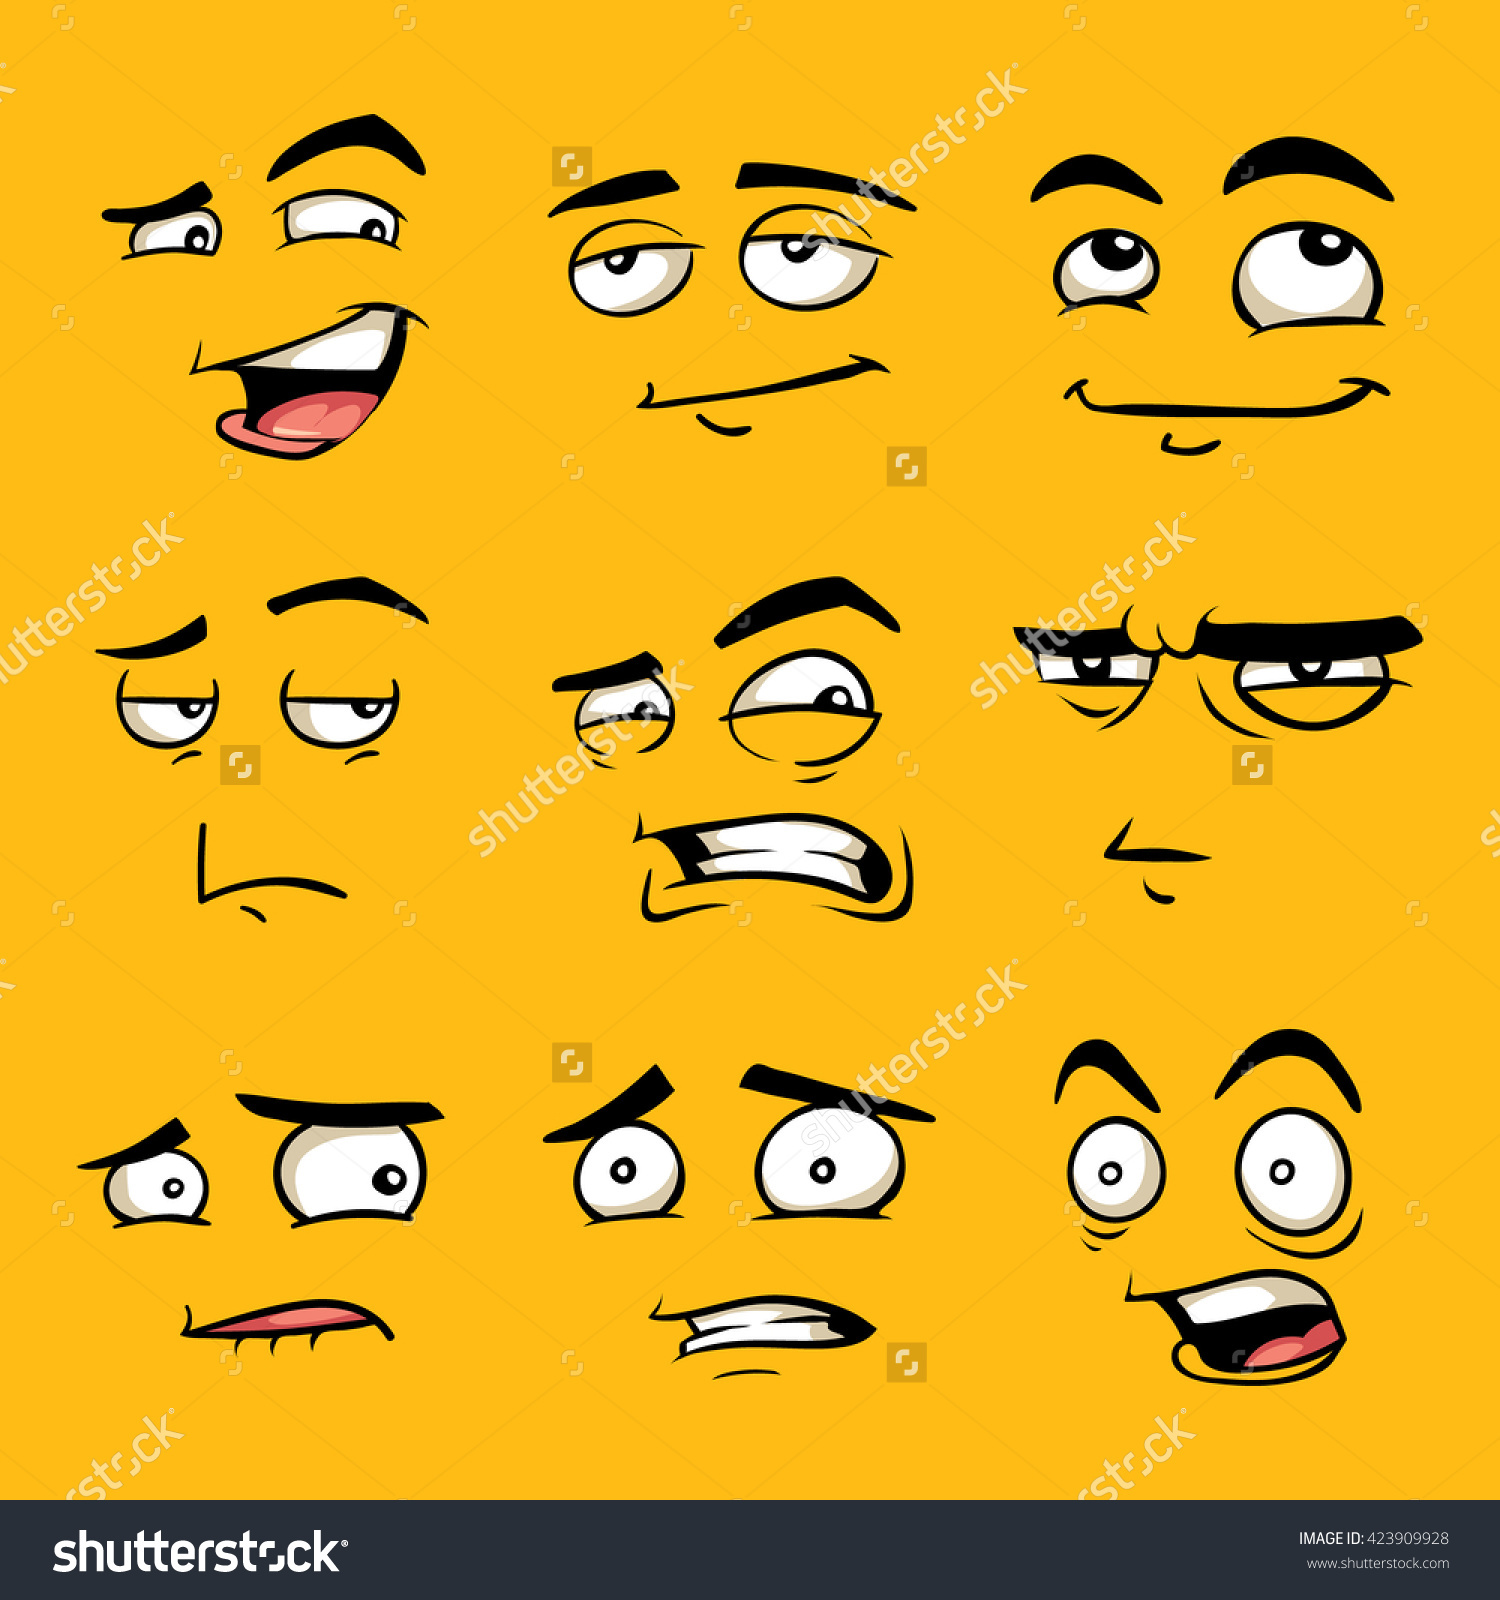 Funny Cartoon Faces Emotions Vector Clip Stock Vector 423909928.